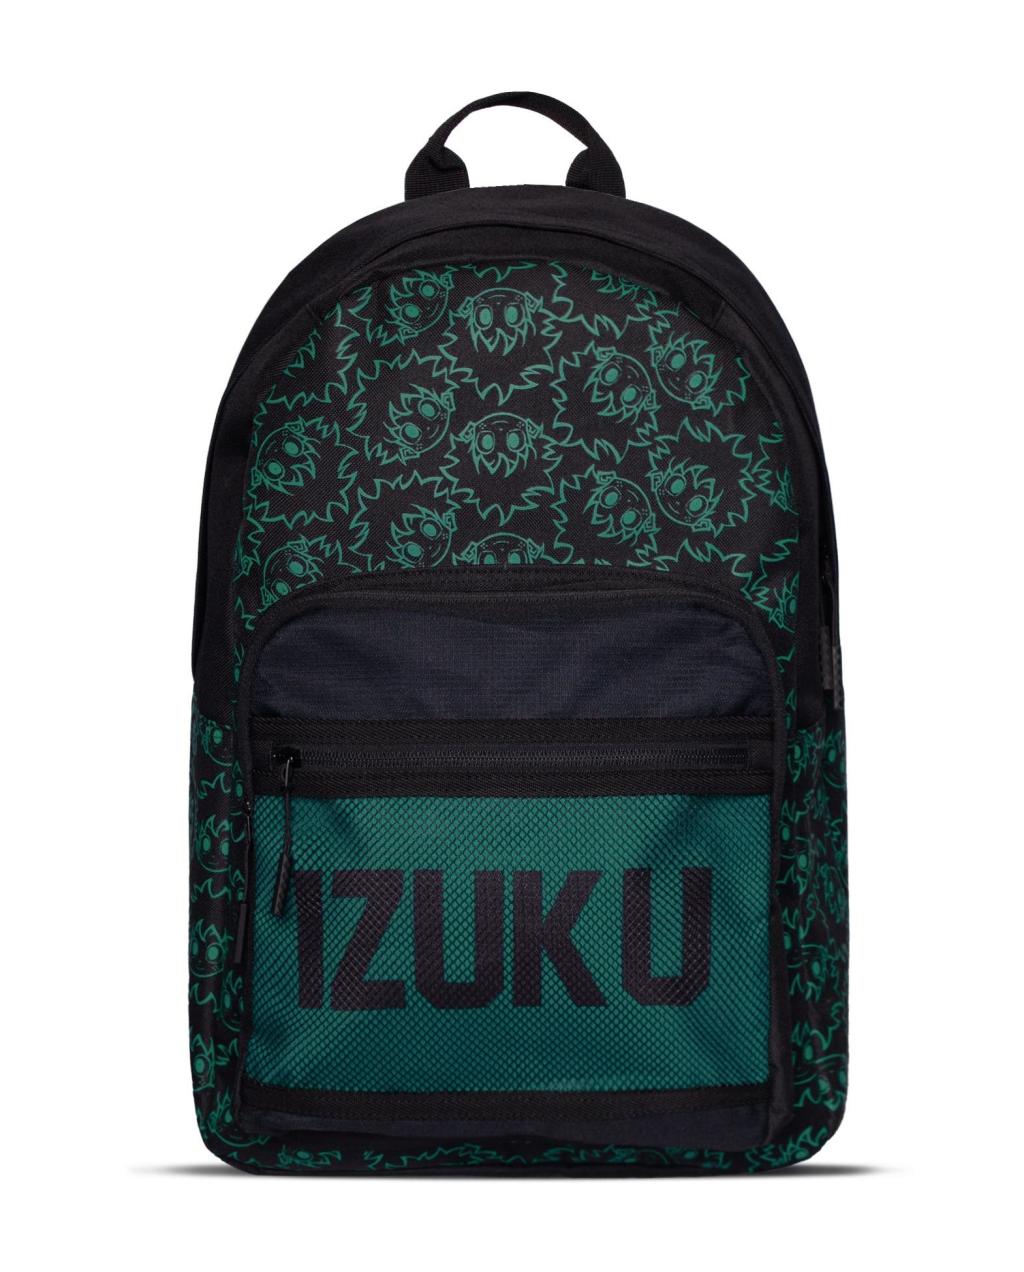 MY HERO ACADEMIA - Izuku - Backpack